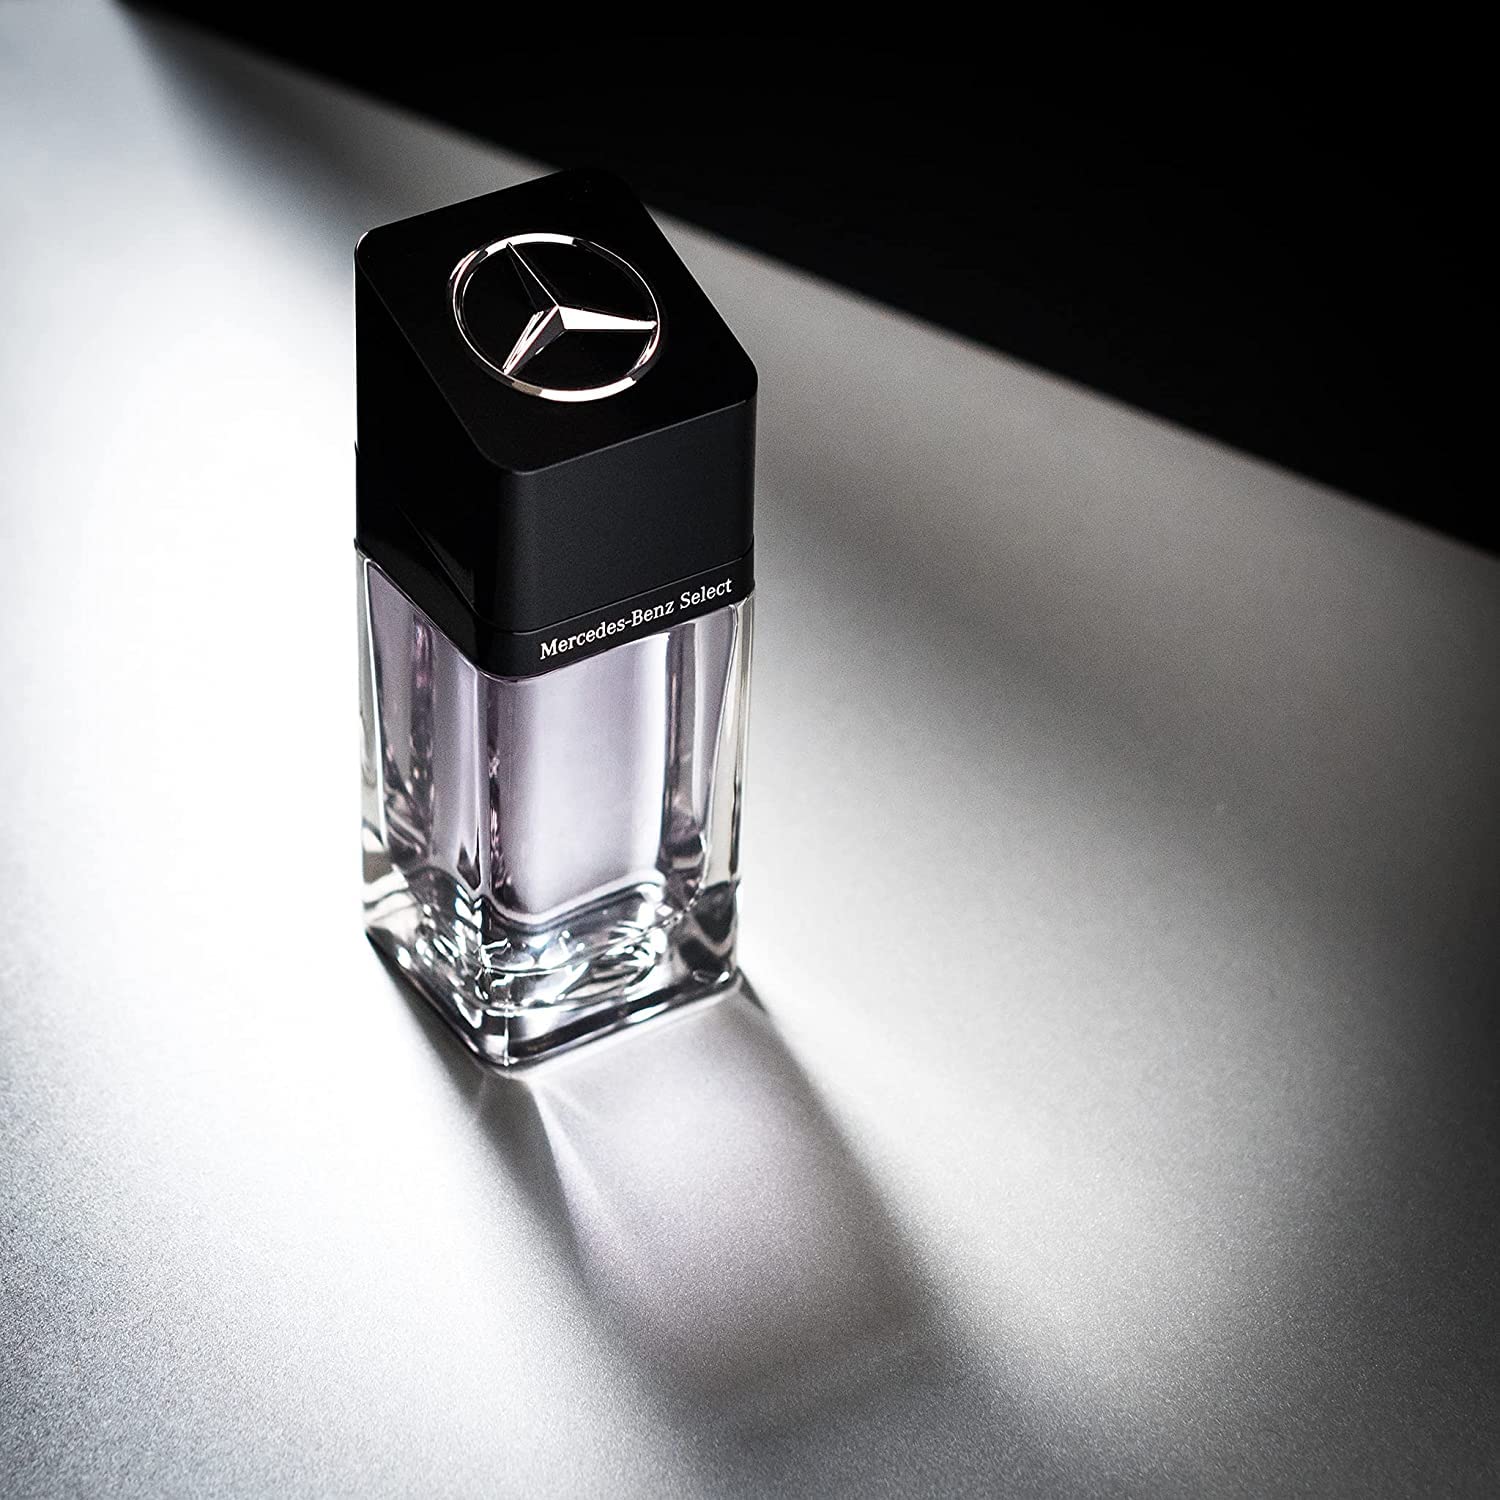 Mercedes Benz Select - Elegant Fragrance With Fresh, Sensual Floral Notes - Mesmerize The Senses With Original Luxury Men’s Eau De Toilette Spray - Endless Day Through Night Scent Payoff - 3.4 OZ